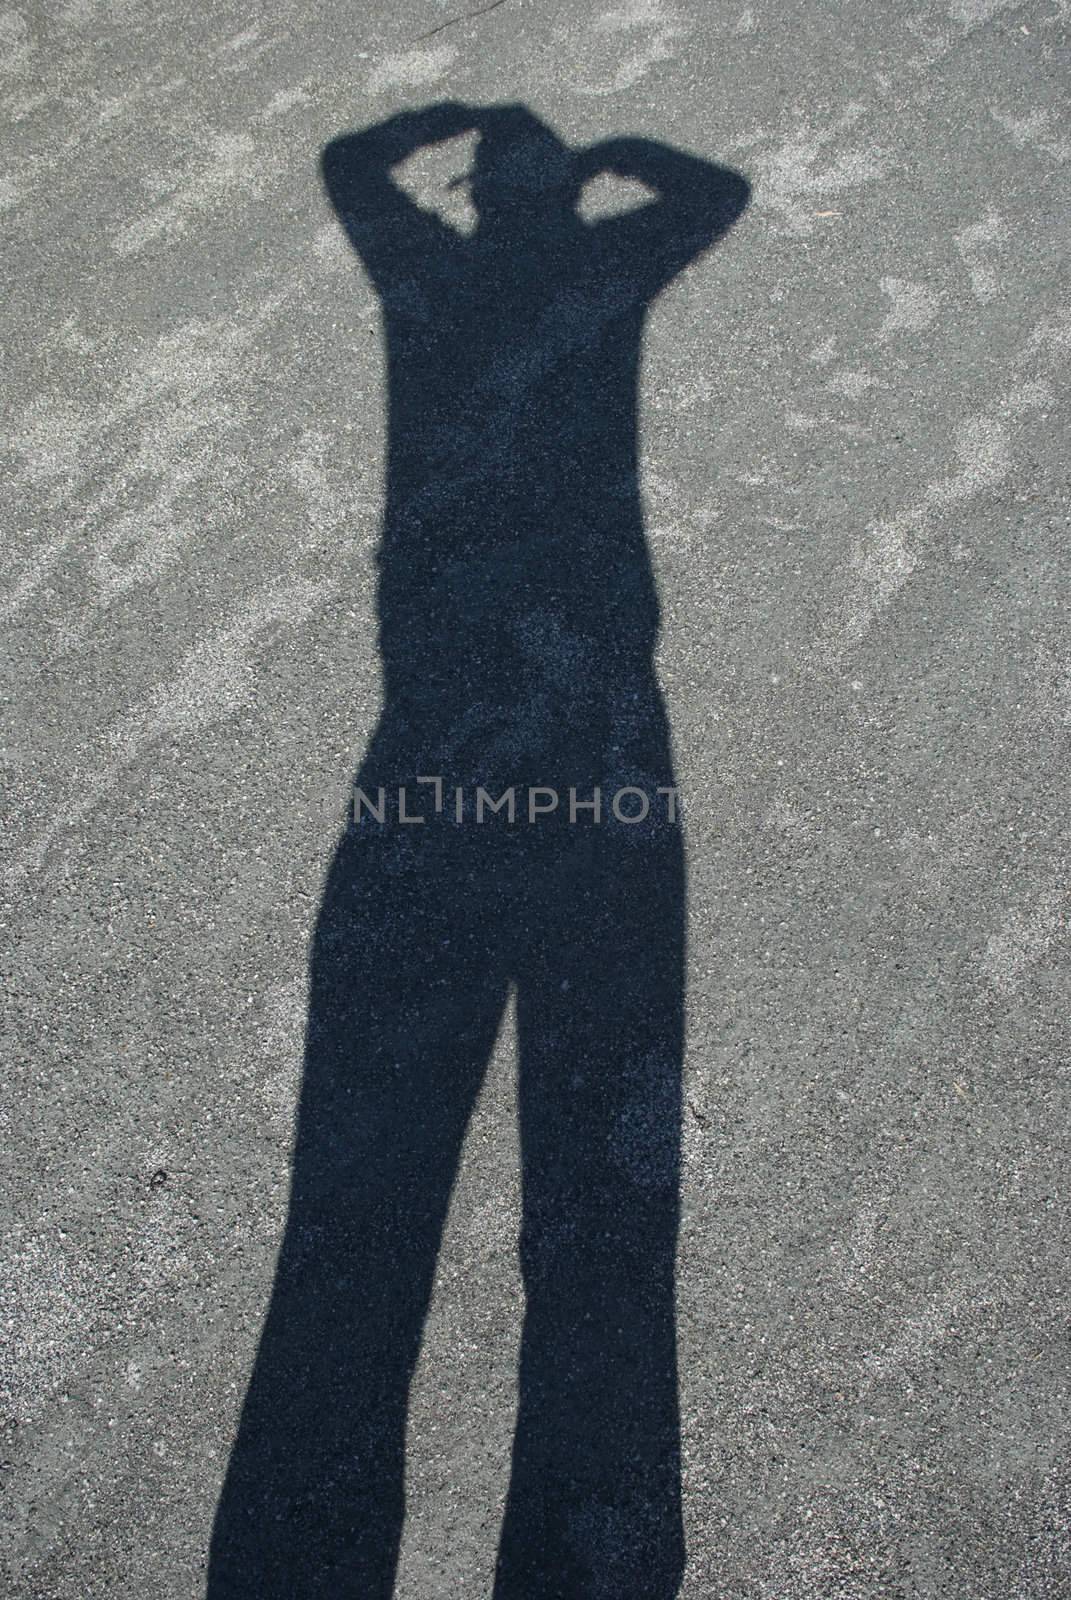 Photographers shadow